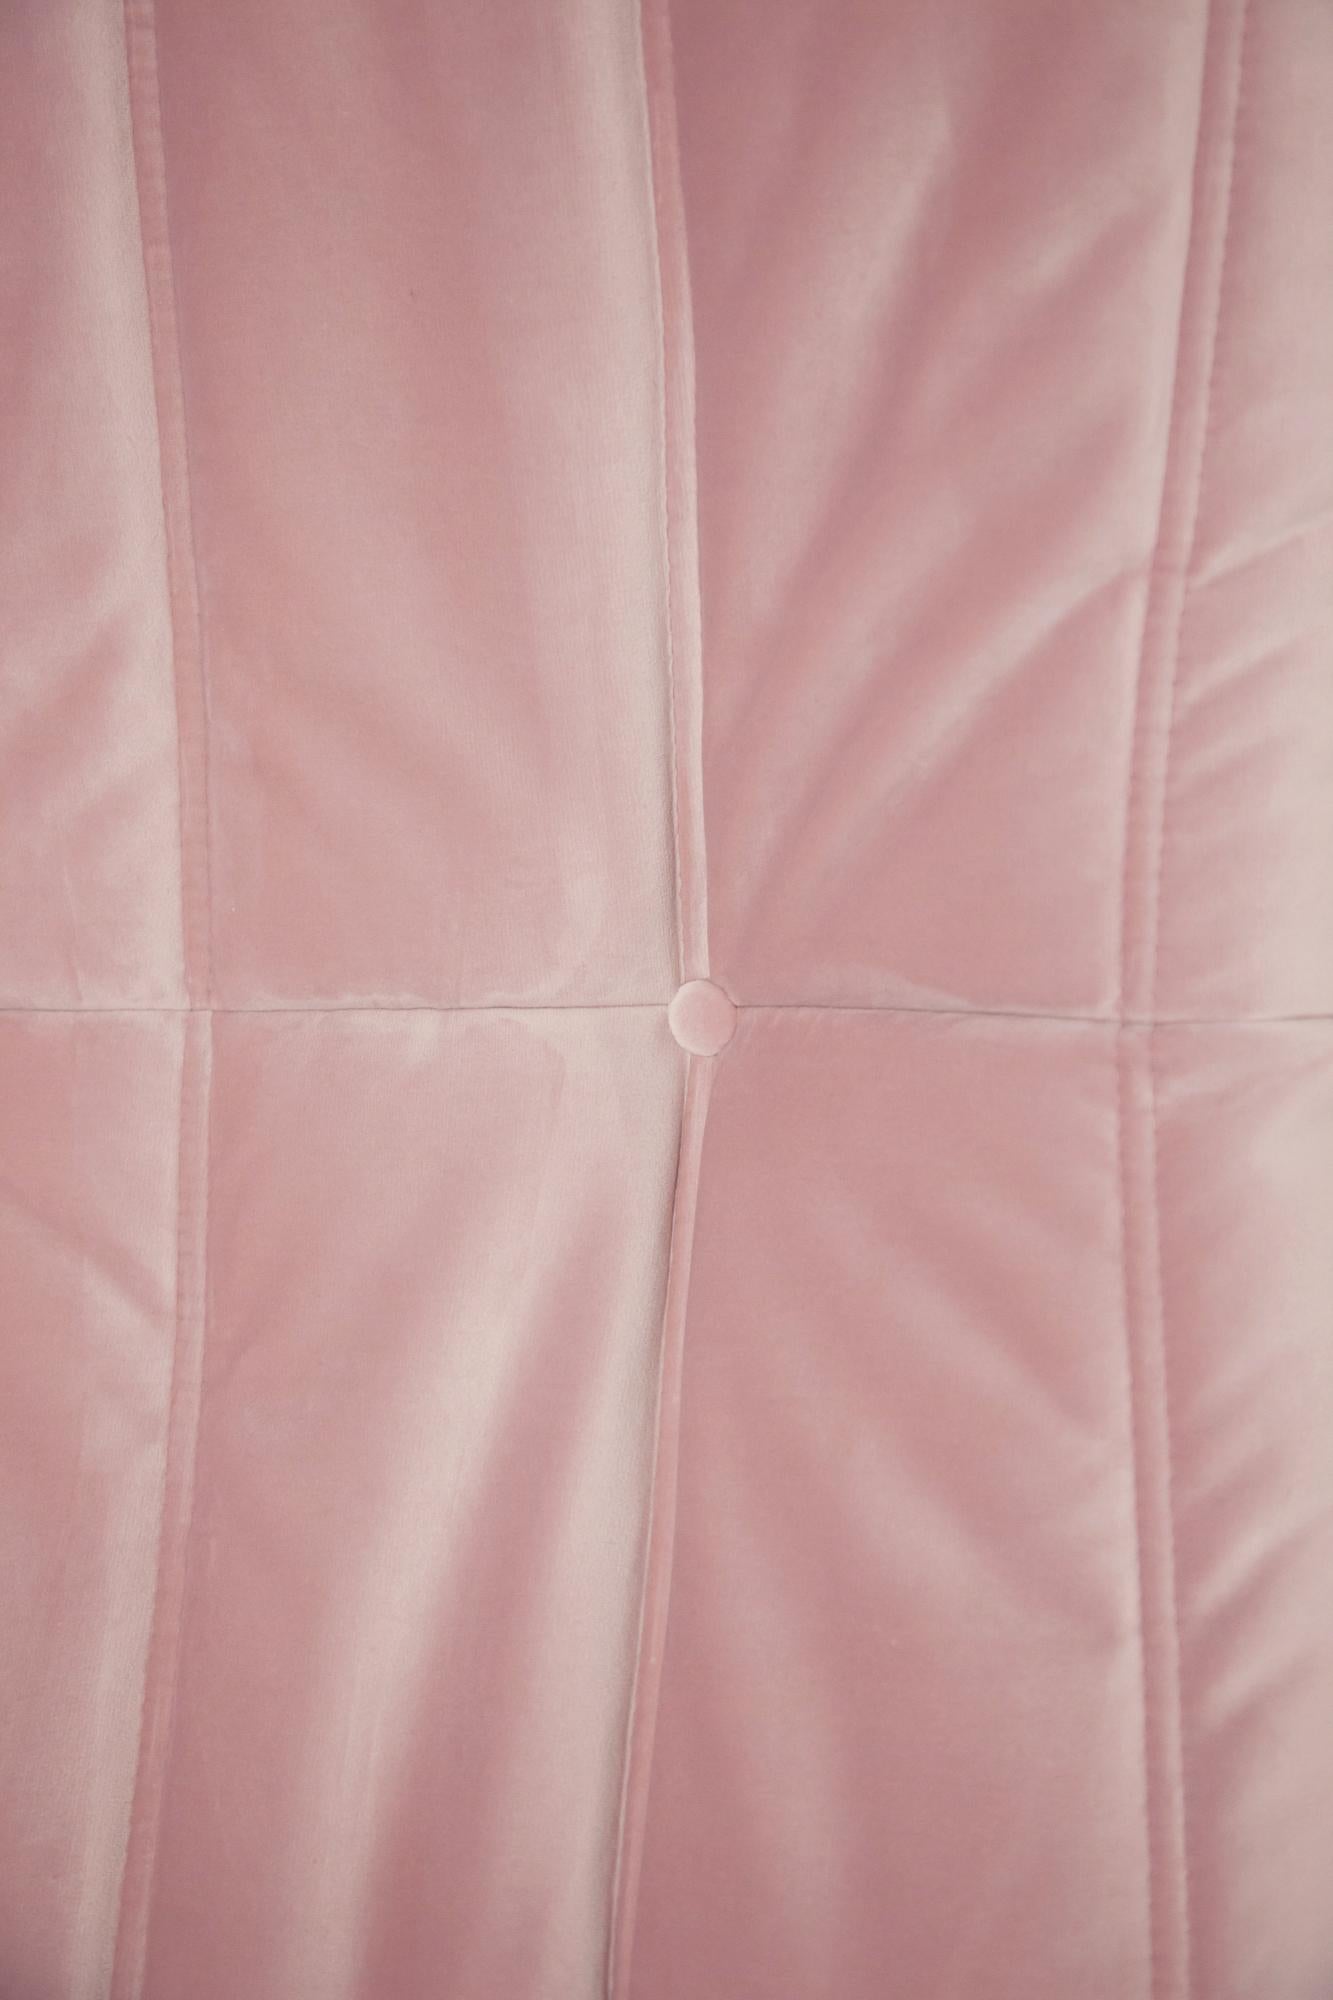 Togo Longue Chair in Pink Velvet by Michel Ducaroy, Ligne Roset In Excellent Condition For Sale In Berlin, DE